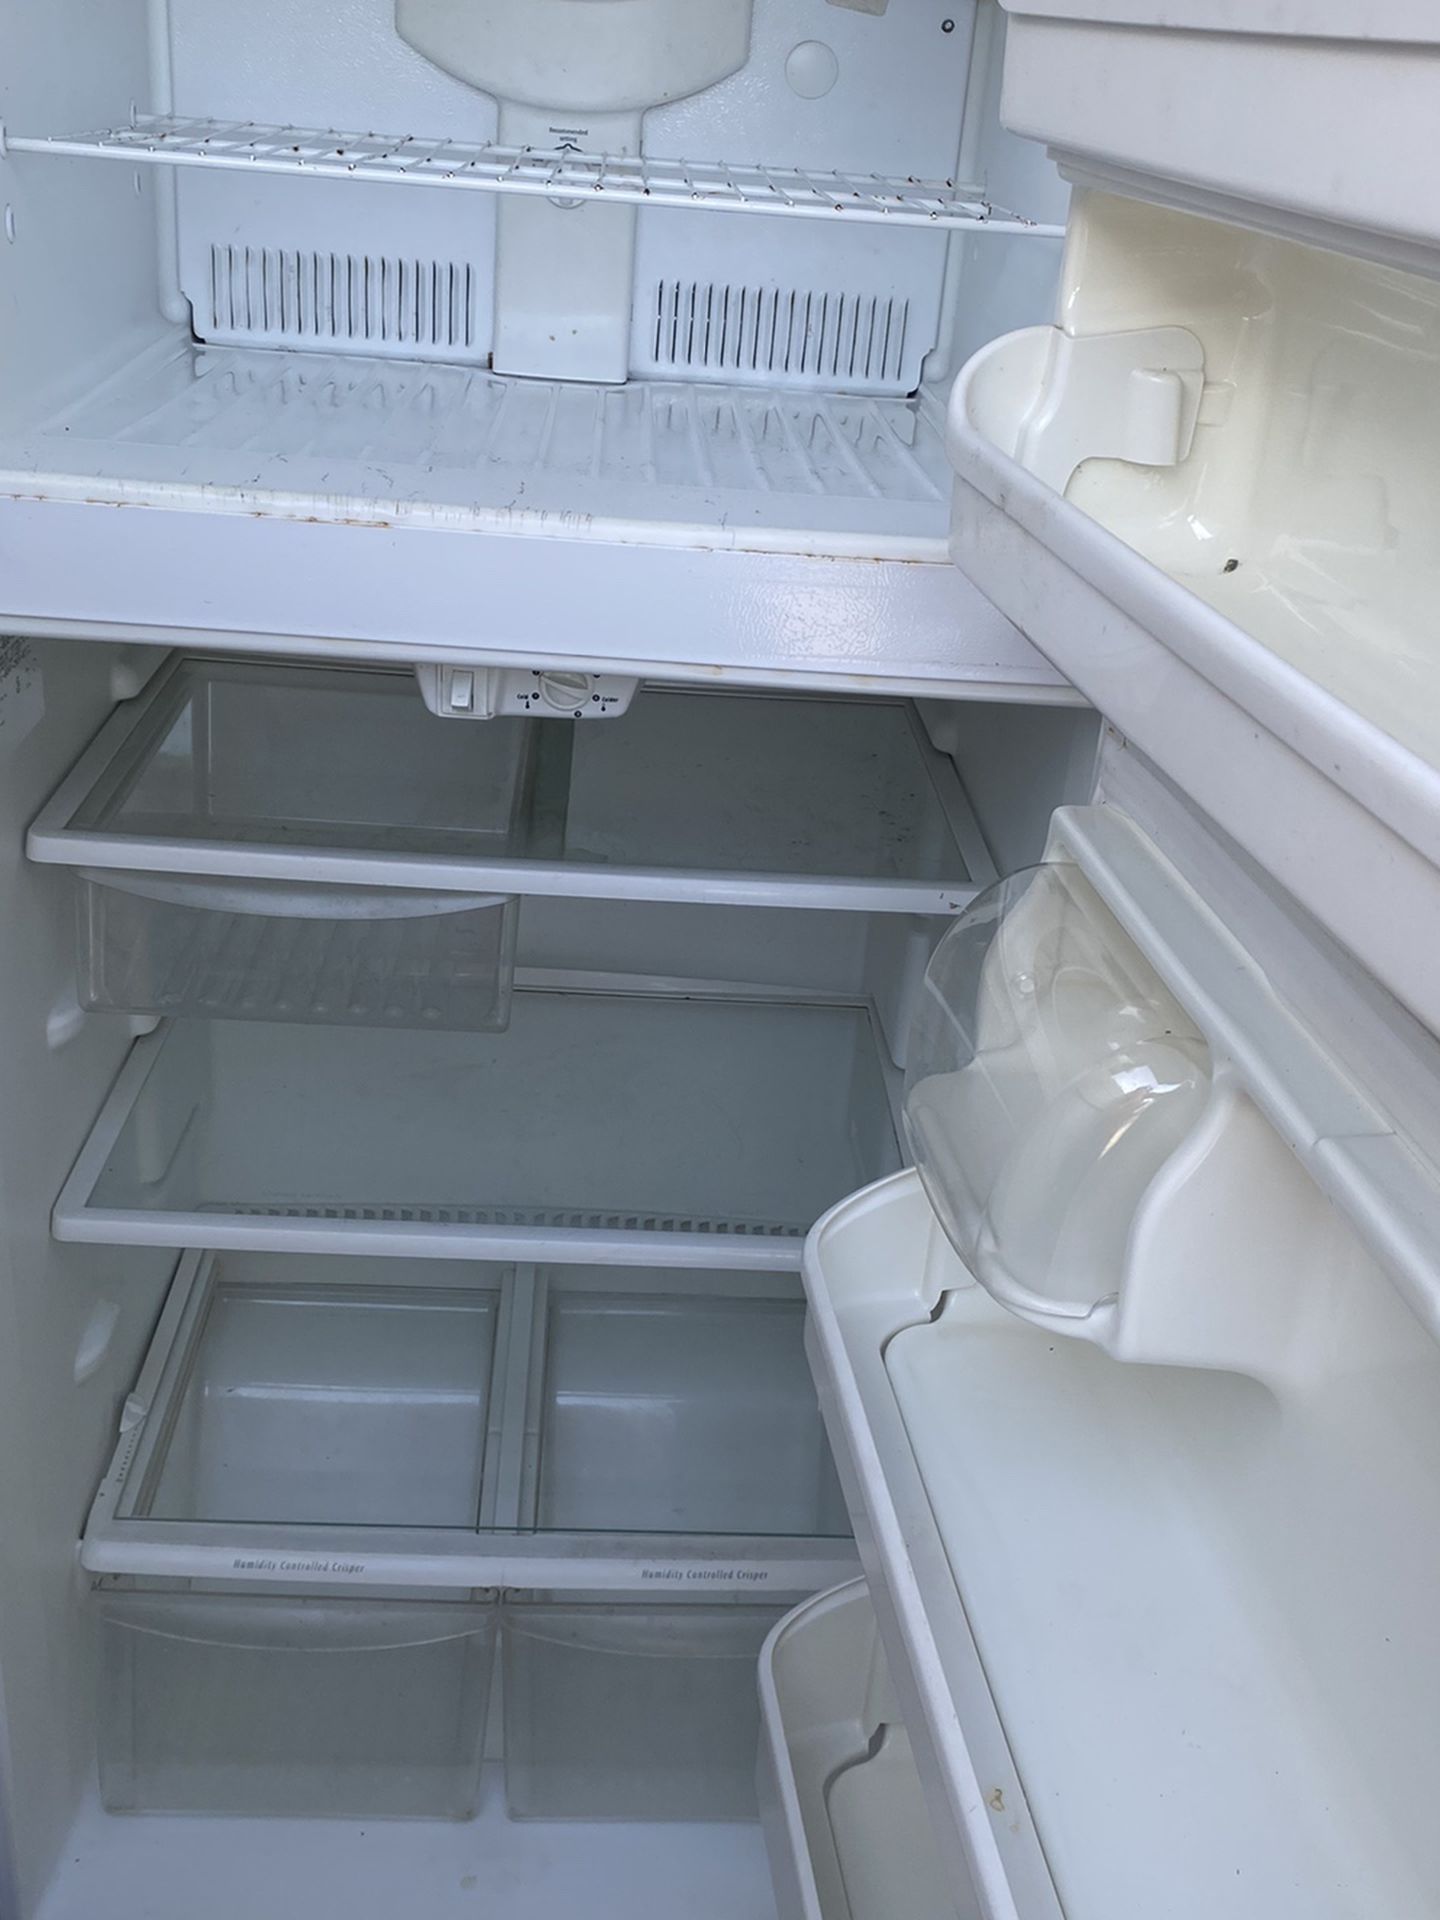 Fridge Working Perfect Freezer Perfect